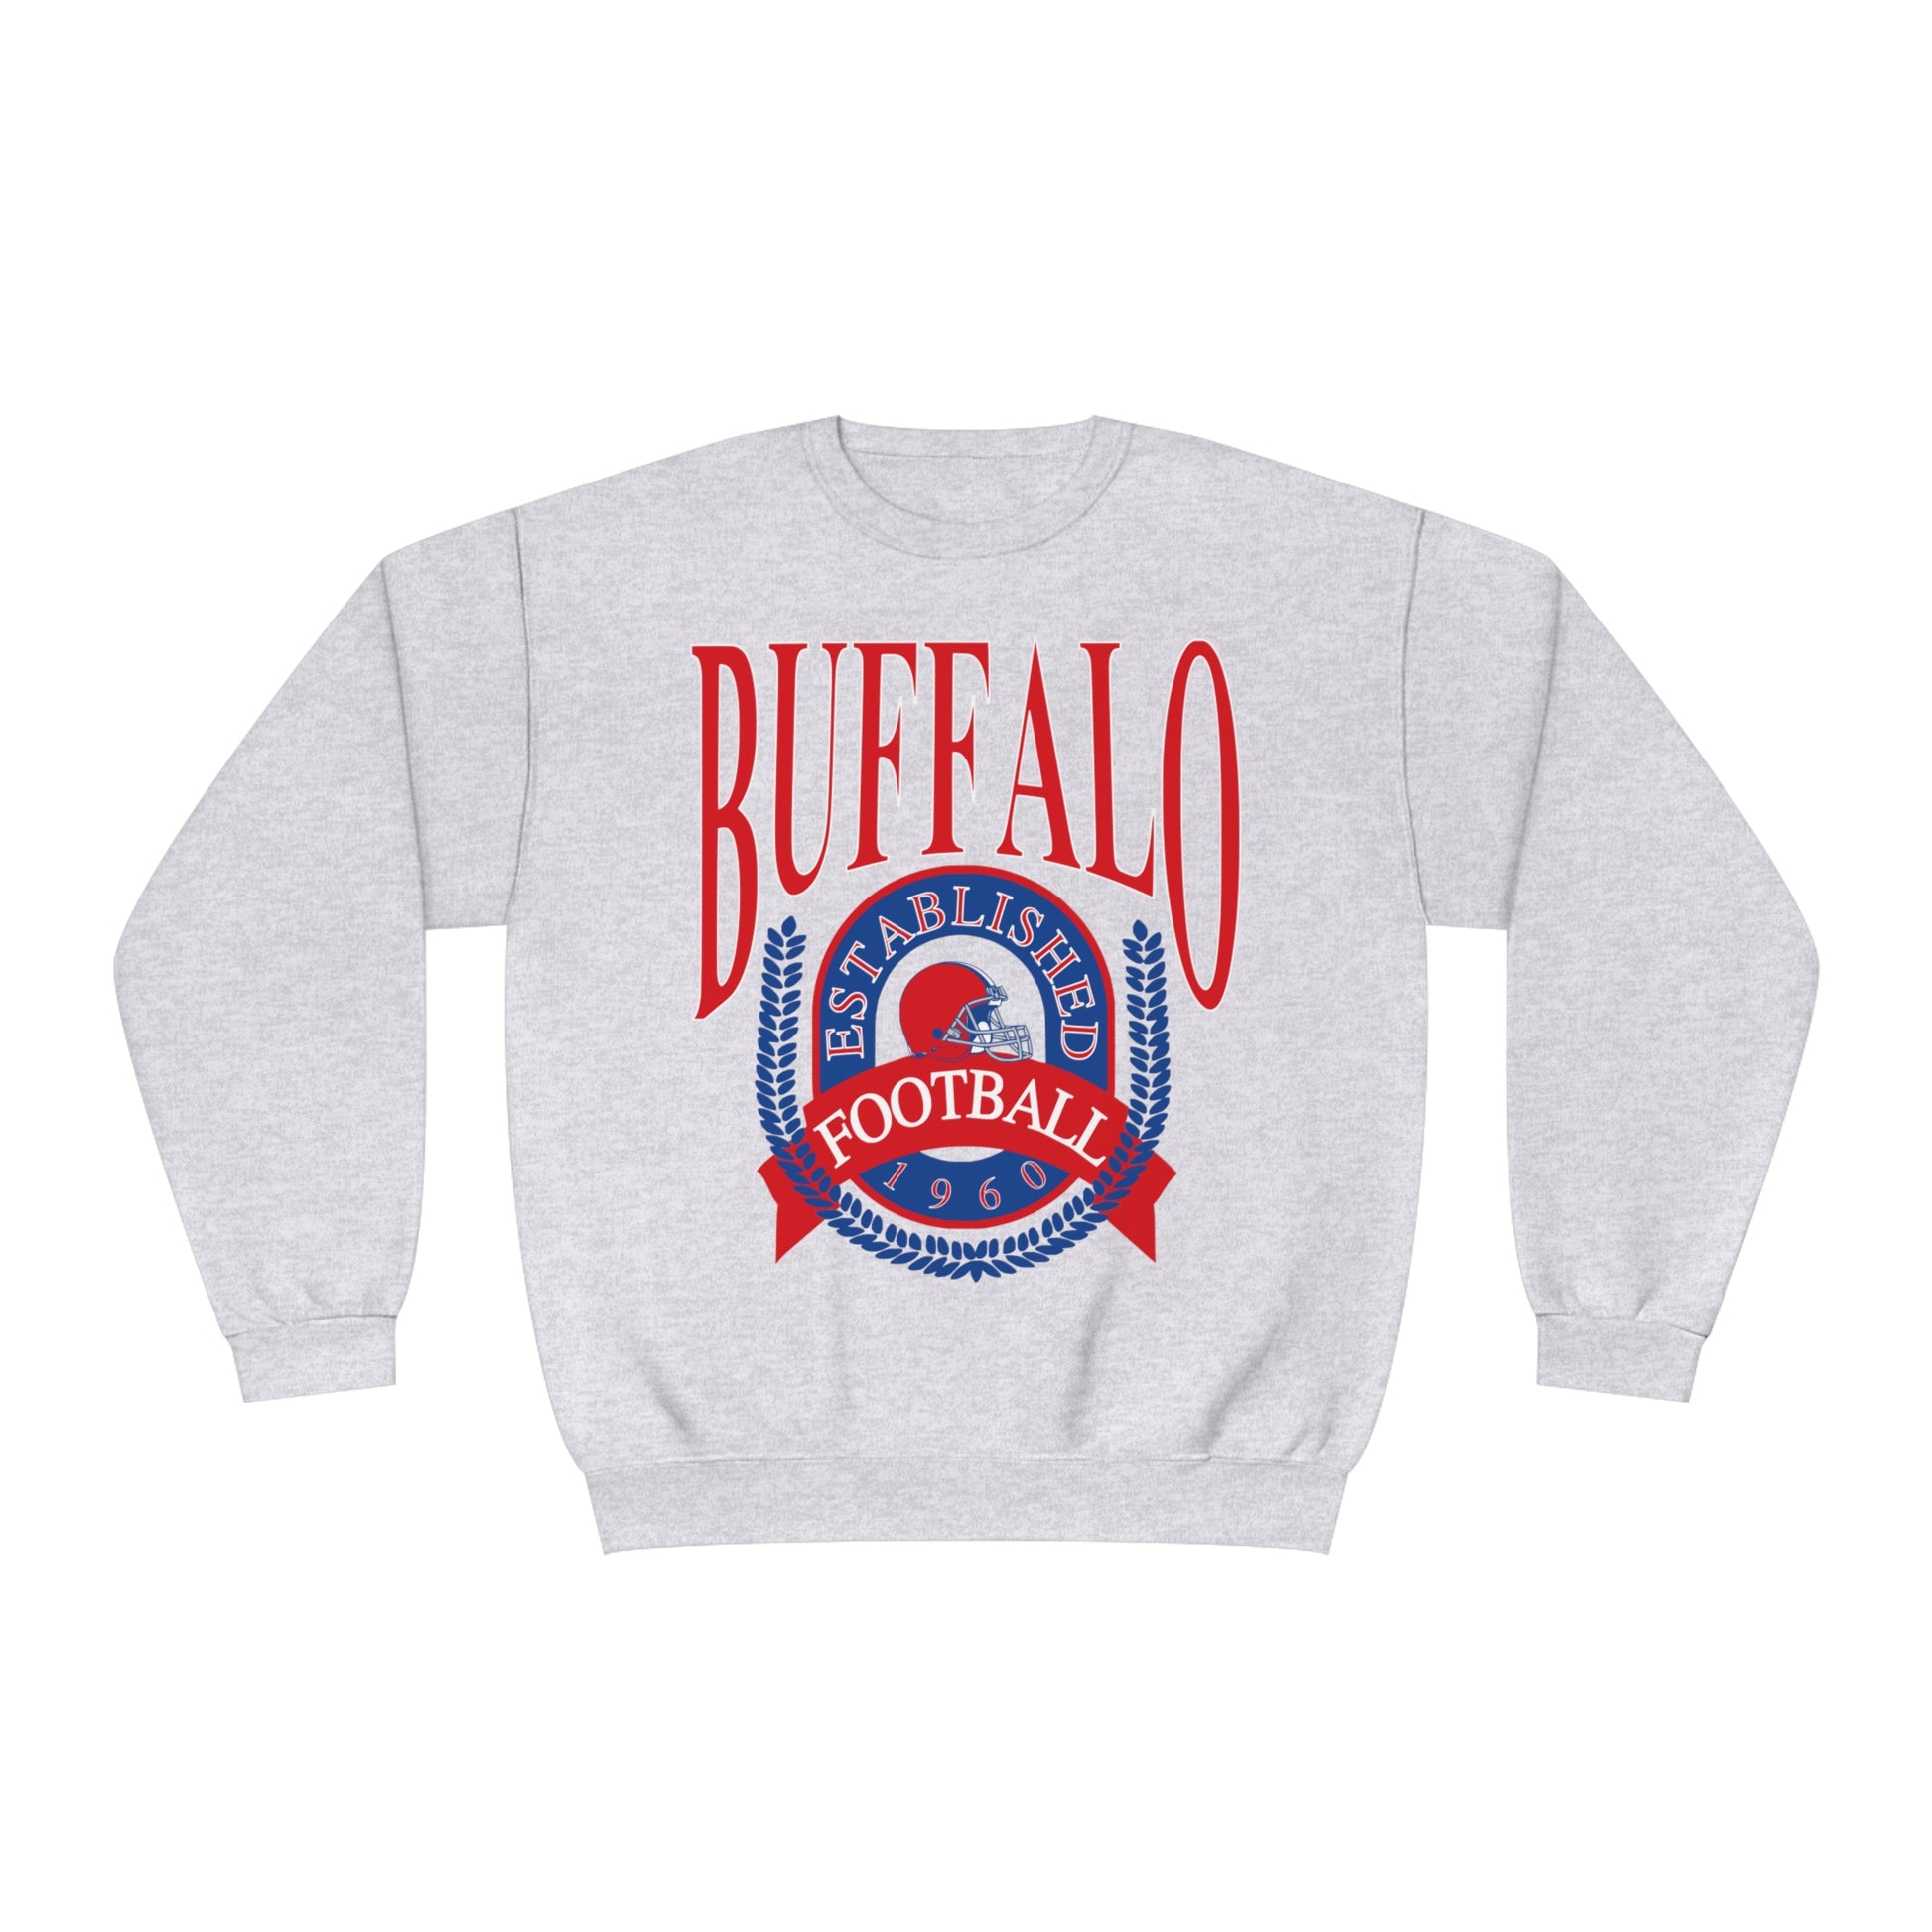 Vintage Buffalo Bills Crewneck Sweatshirt - Retro NFL Football Men's Women's Hoodie - Oversized Apparel - Design 1 Light Gray